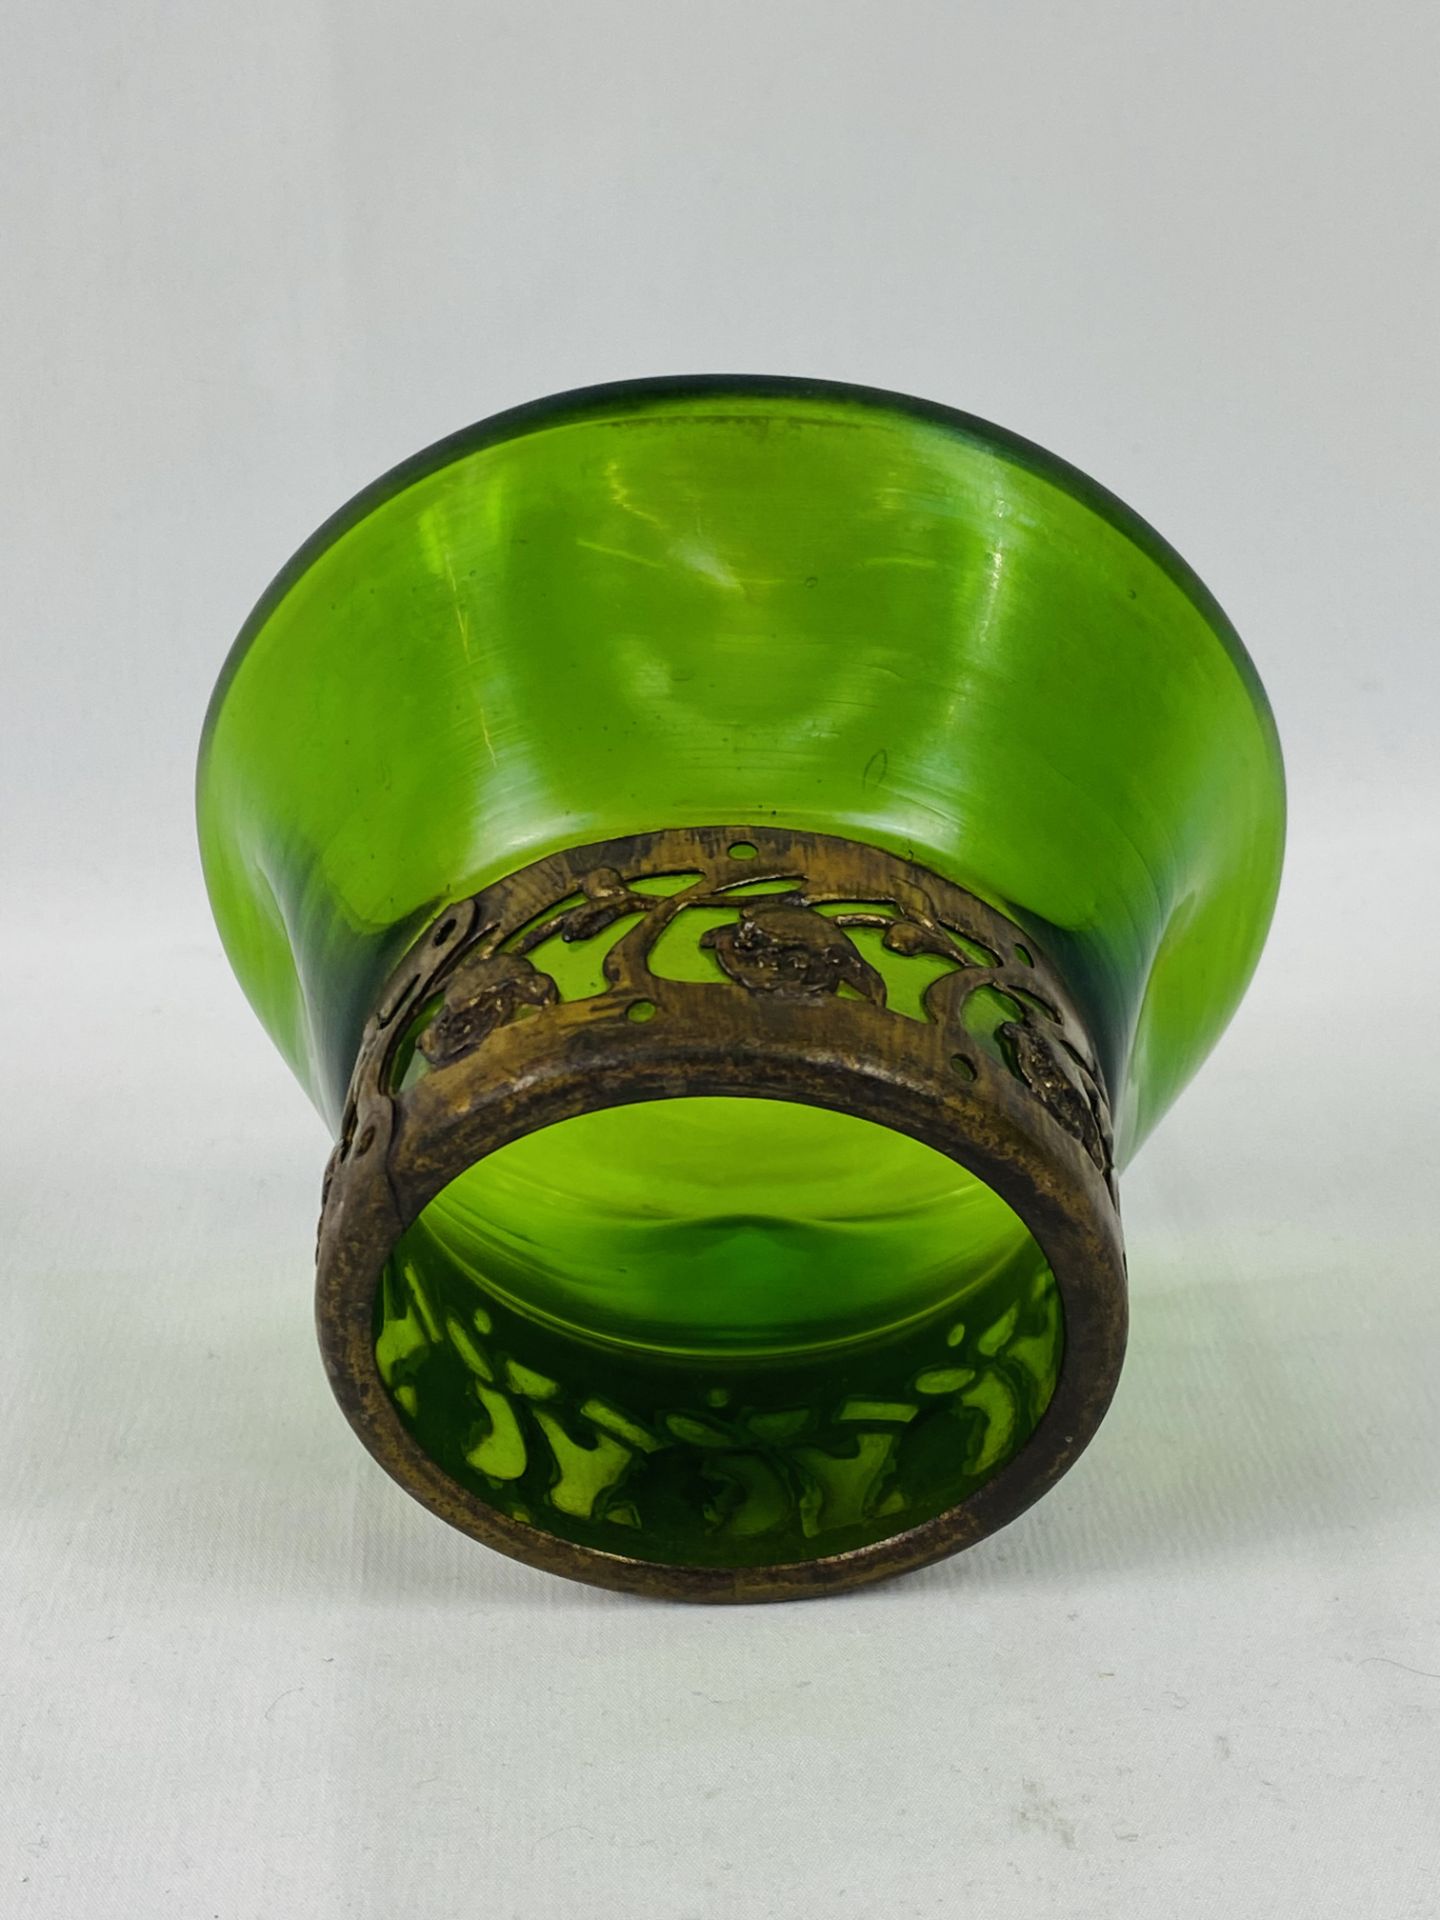 Austrian green glass bowl - Image 4 of 5